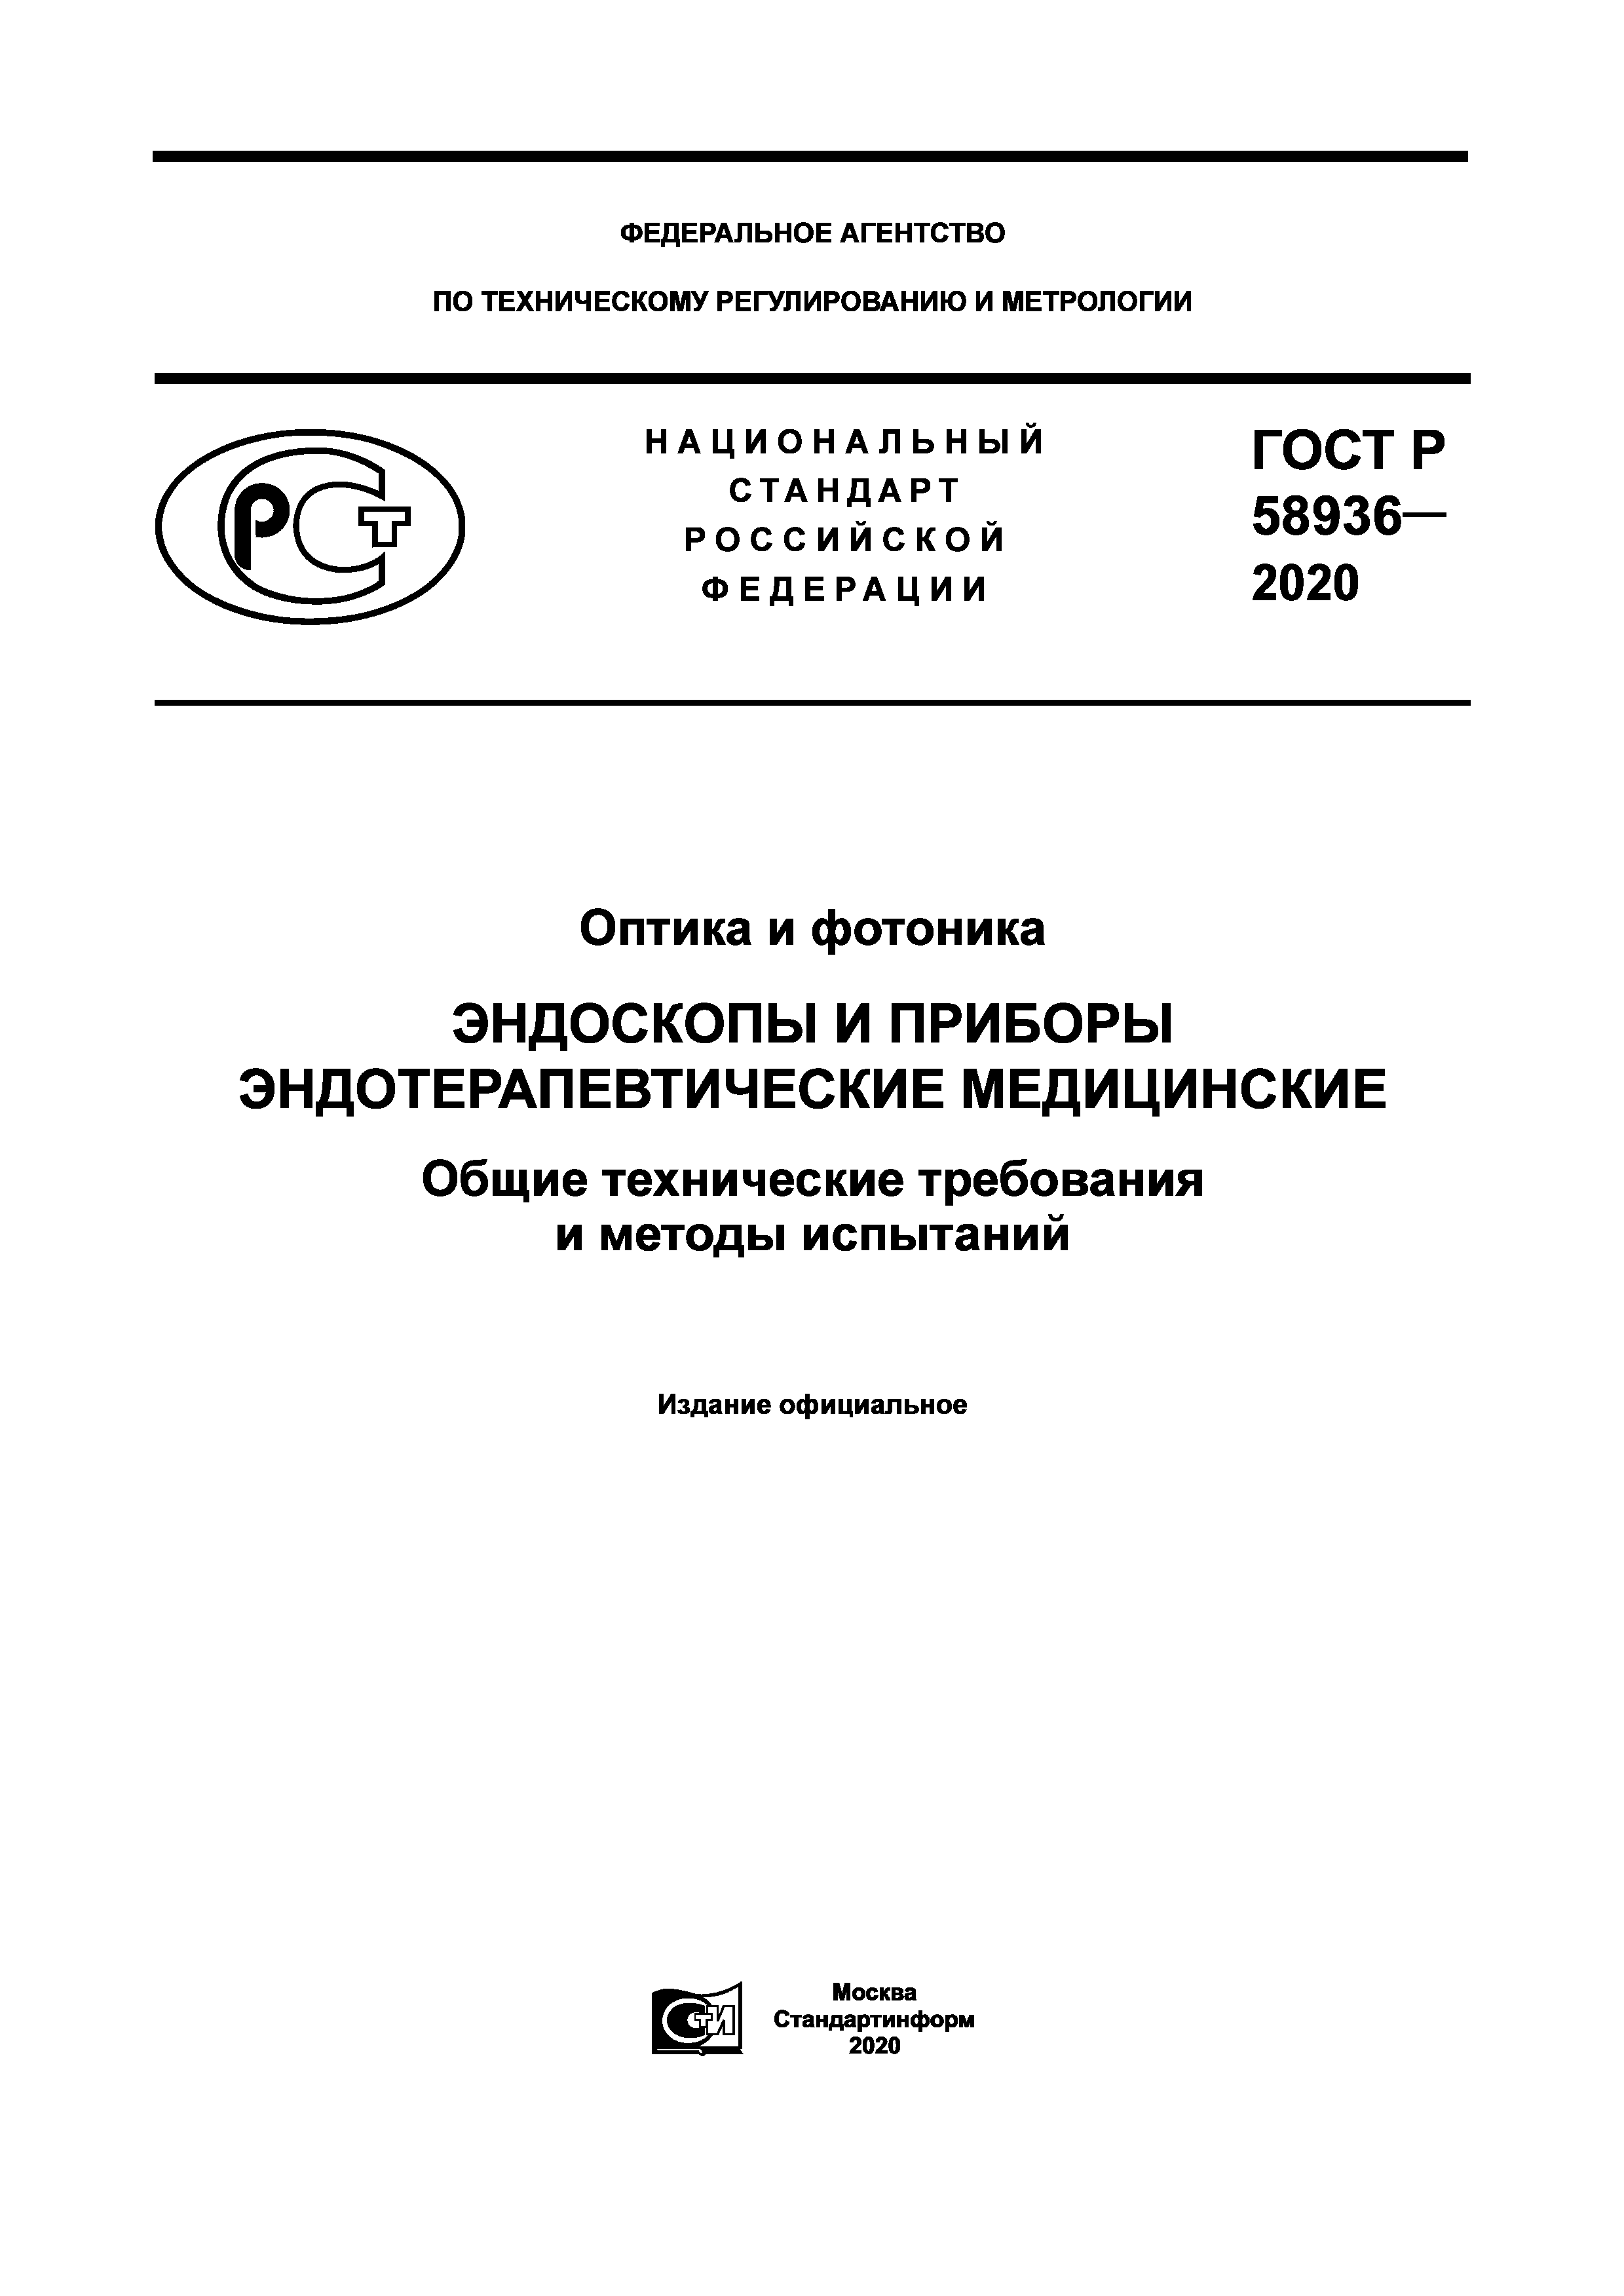 ГОСТ Р 58936-2020